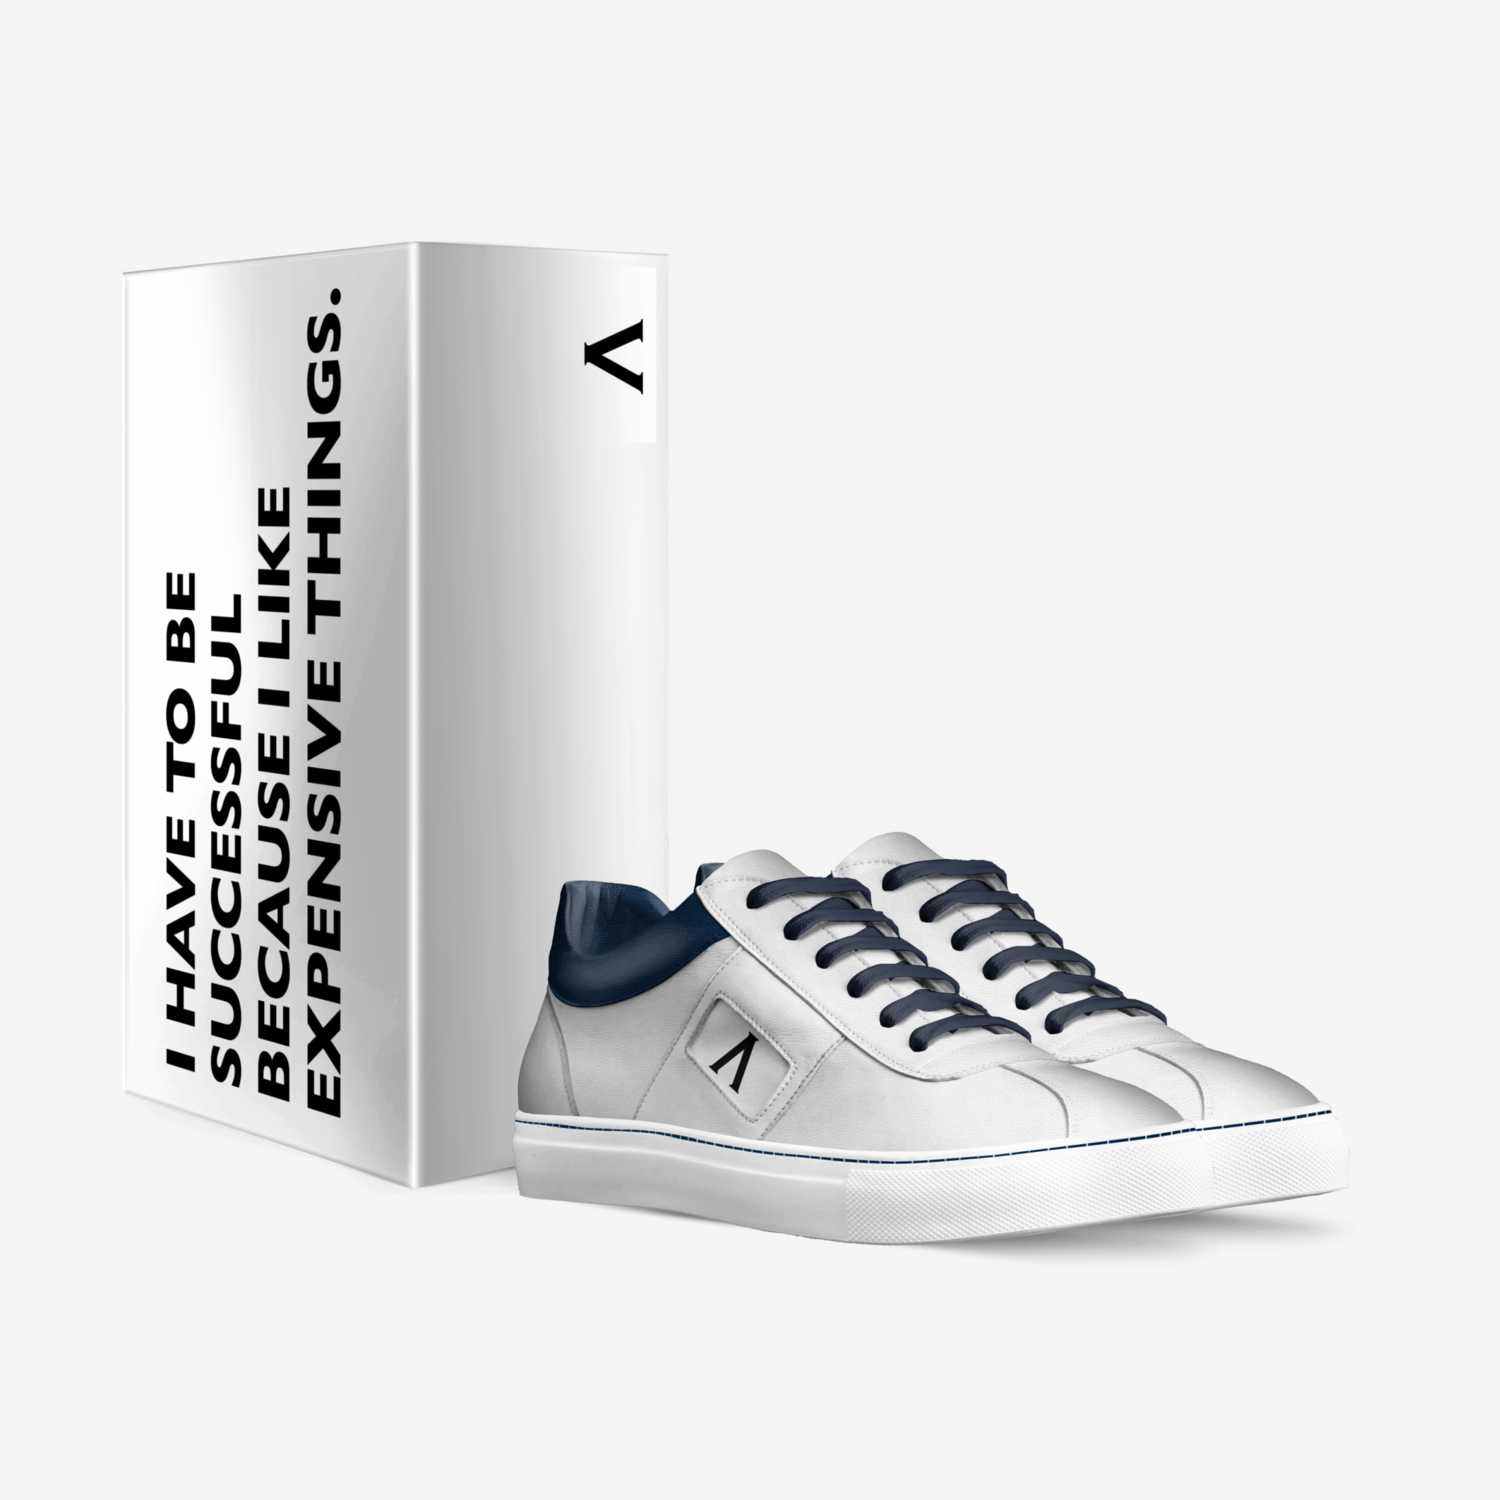 Kairos Kicks 𝛇 custom made in Italy shoes by Raul Martinez Jr | Box view